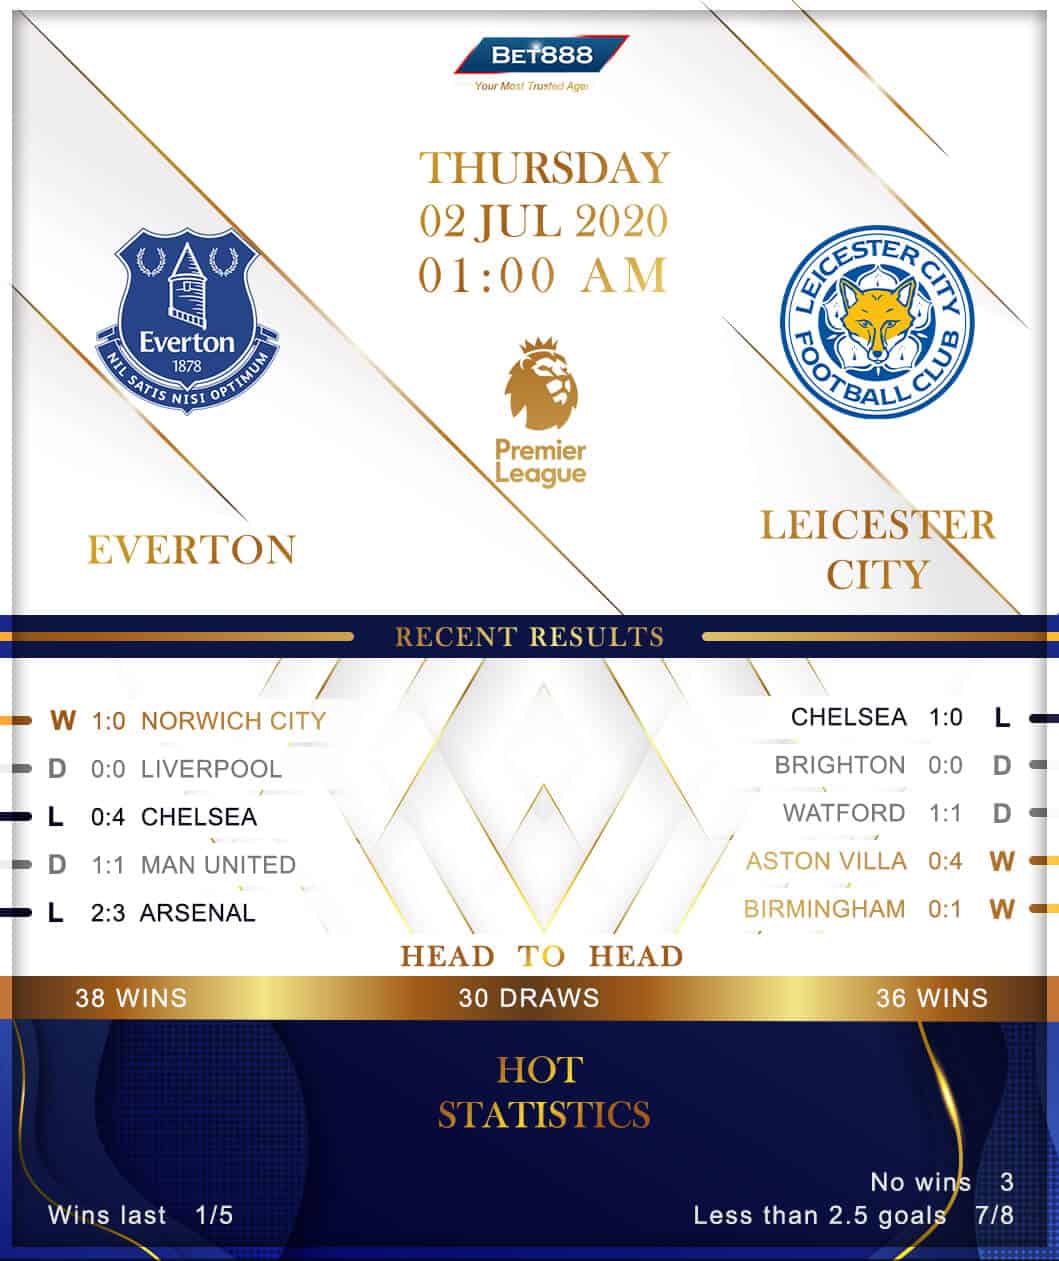 Everton vs Leicester City 02/07/20